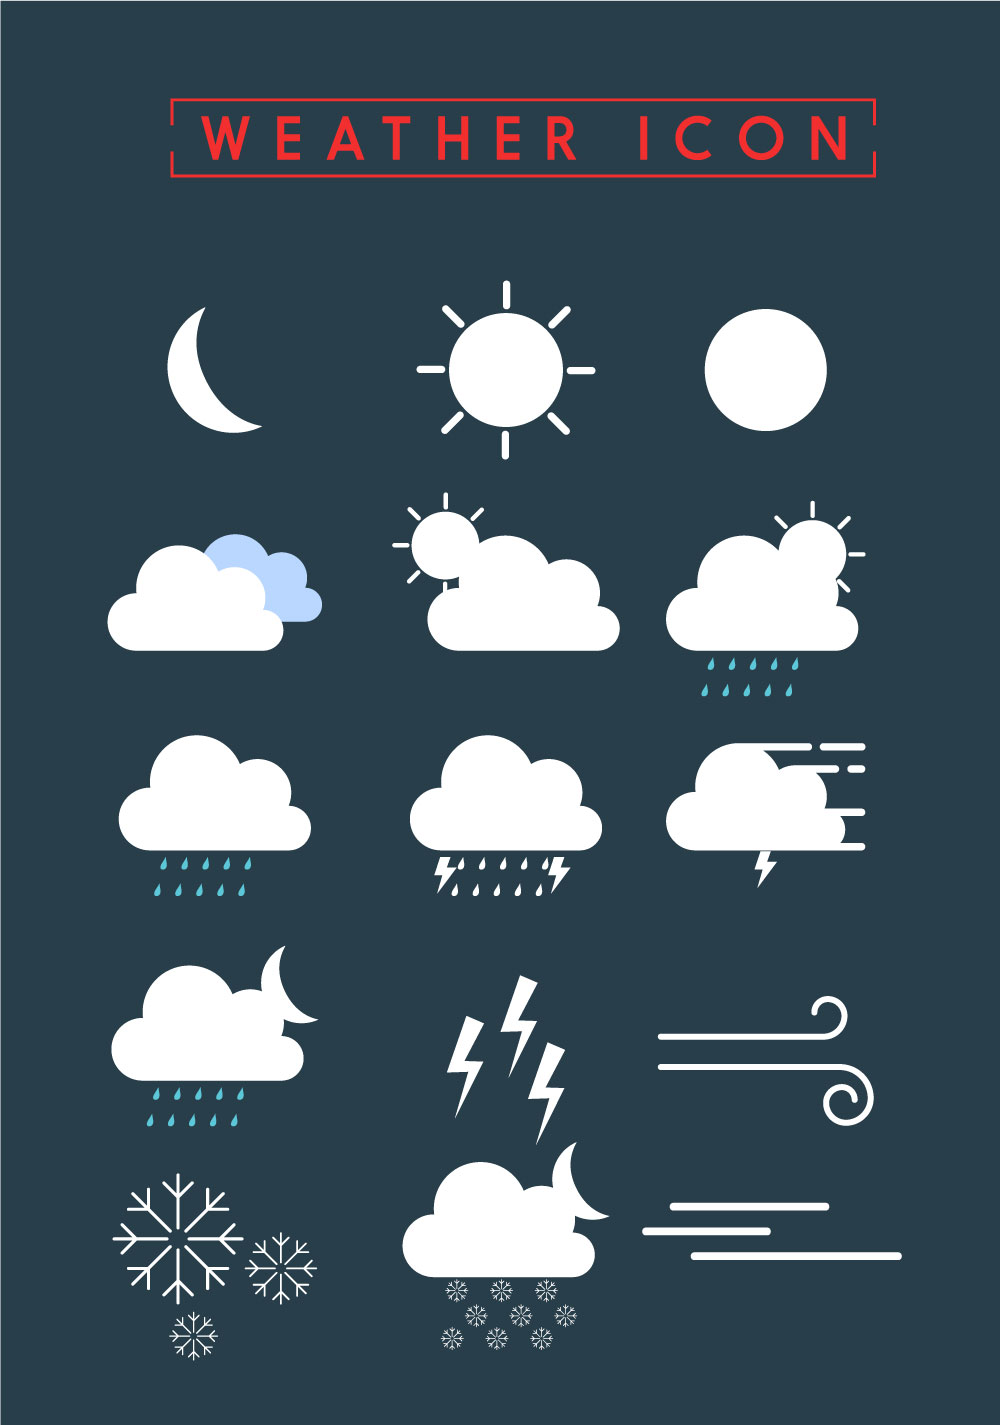 Значки погоды на телефоне. Иконки погоды. Погода дизайн. Погода icon. Дизайн ногодных сториз.